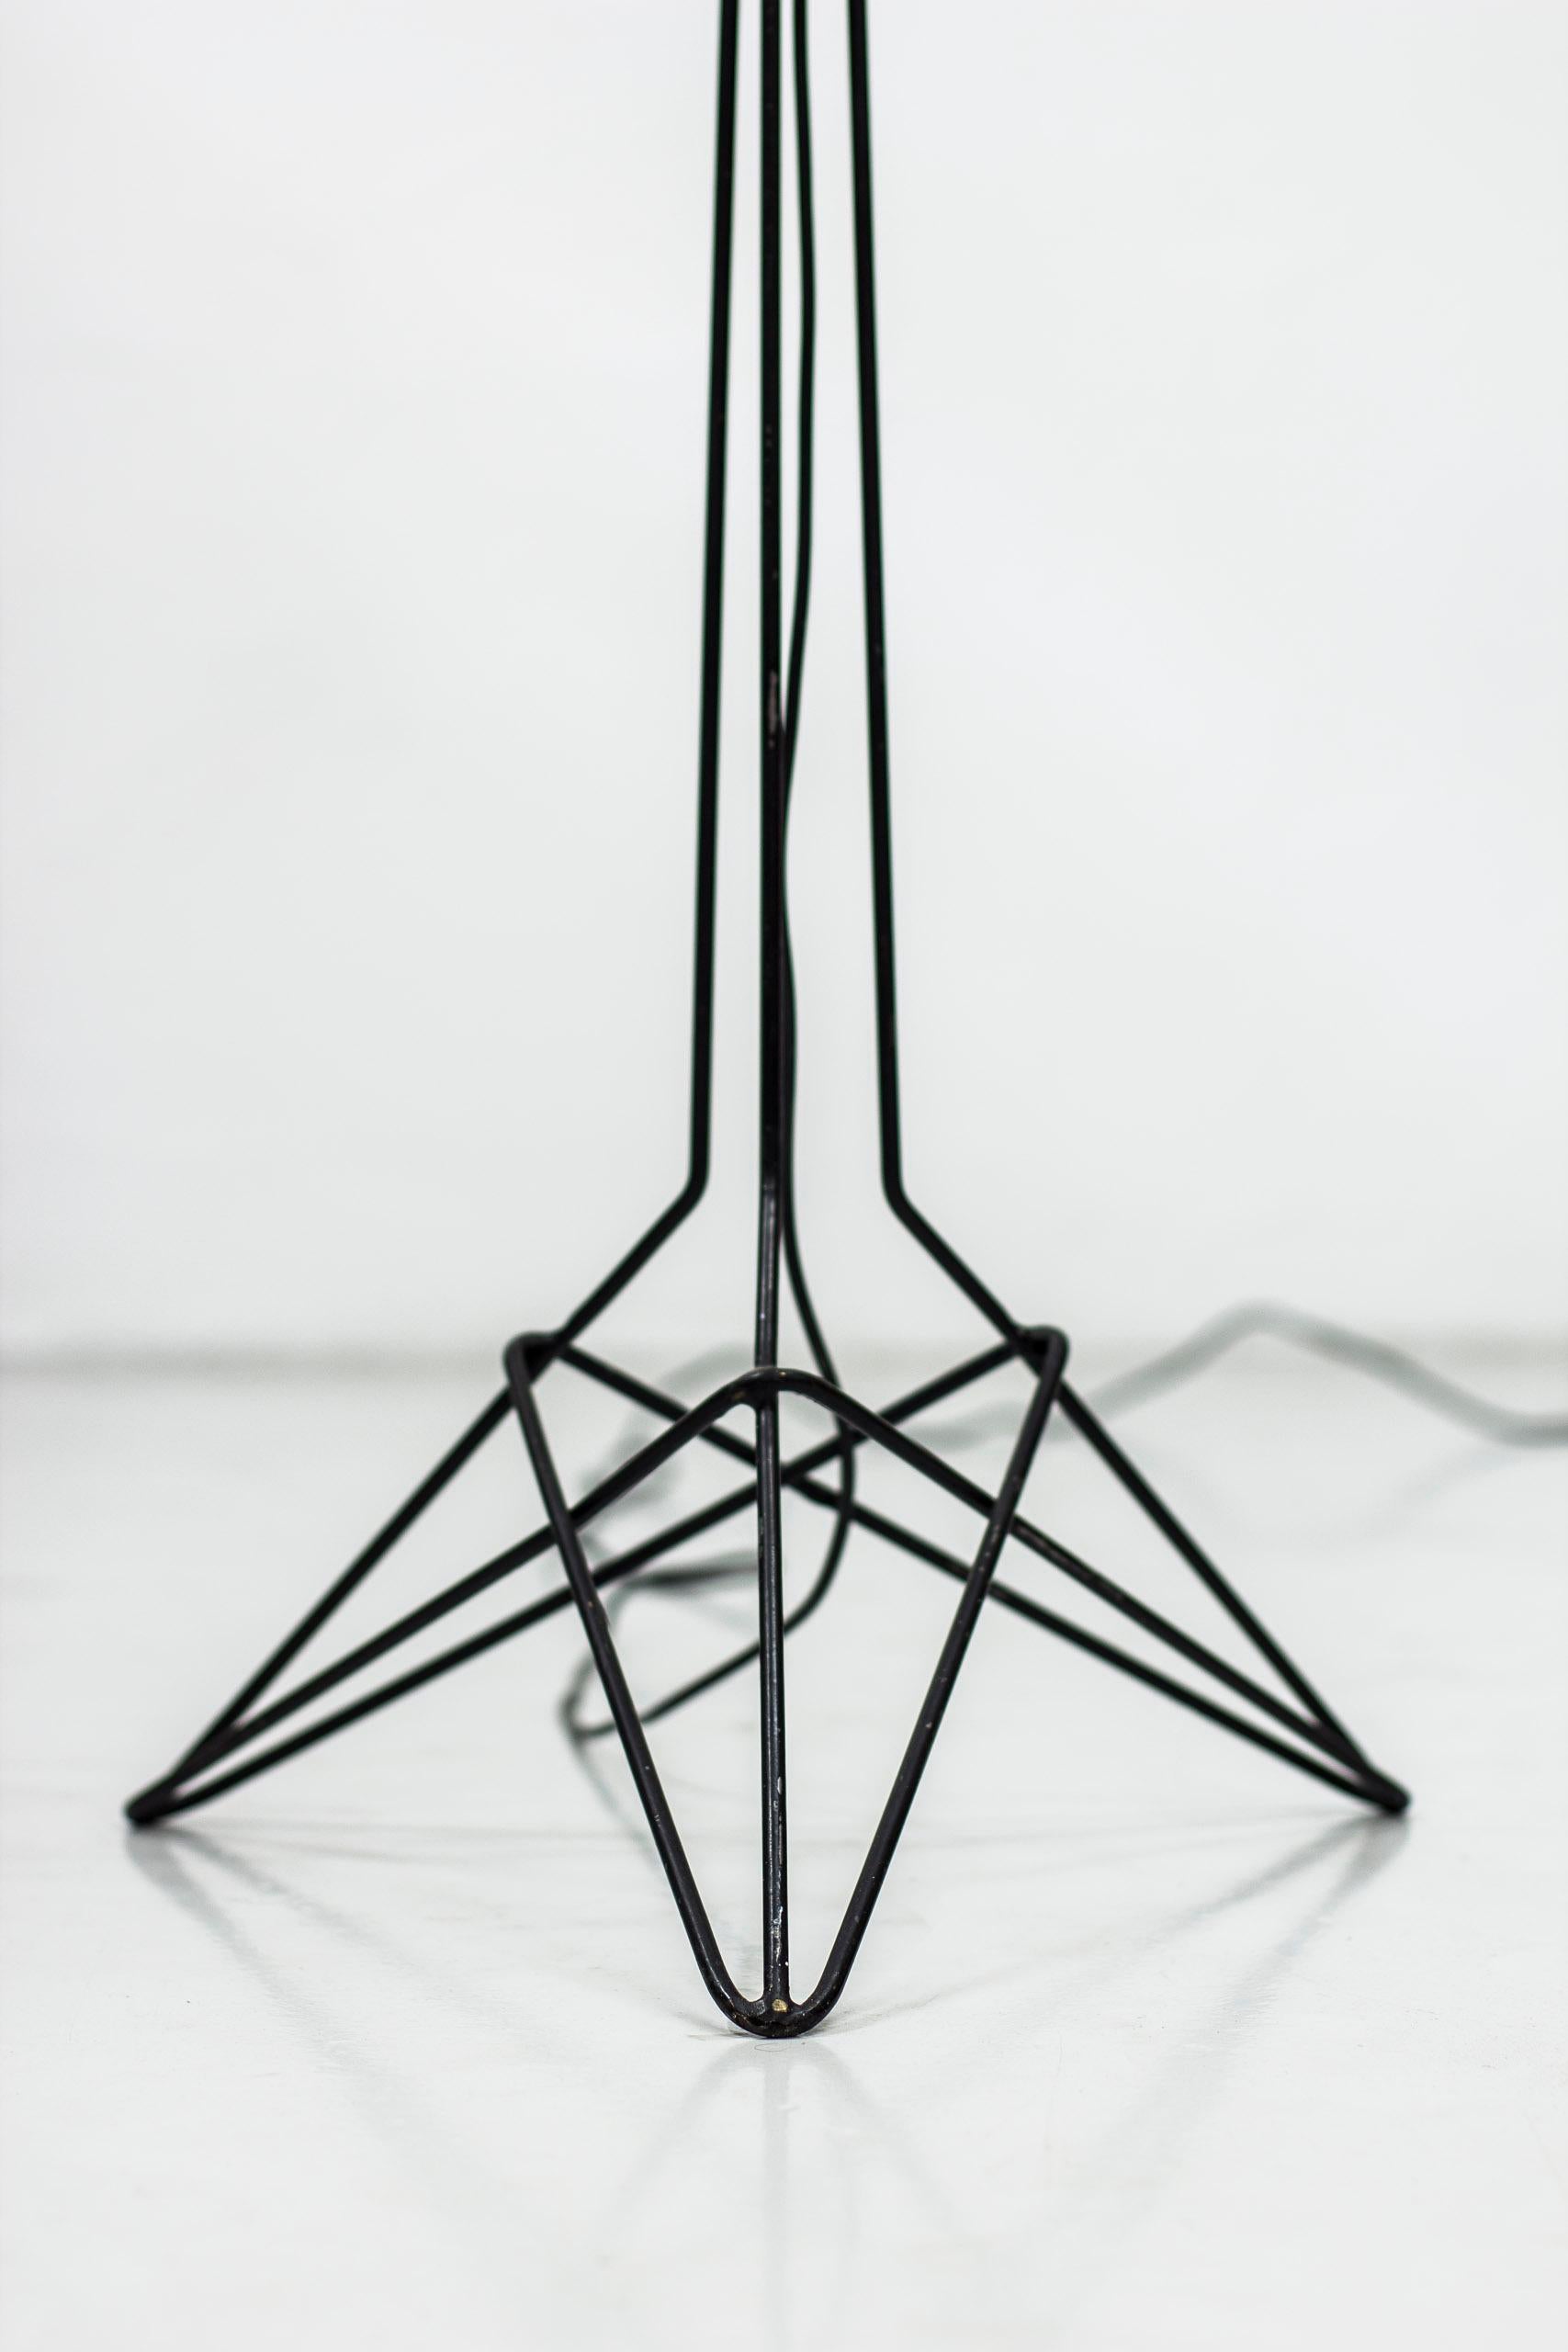 Scandinavian Modern Floor Lamp by Nils Strinning for String Design, Sweden, 1950s